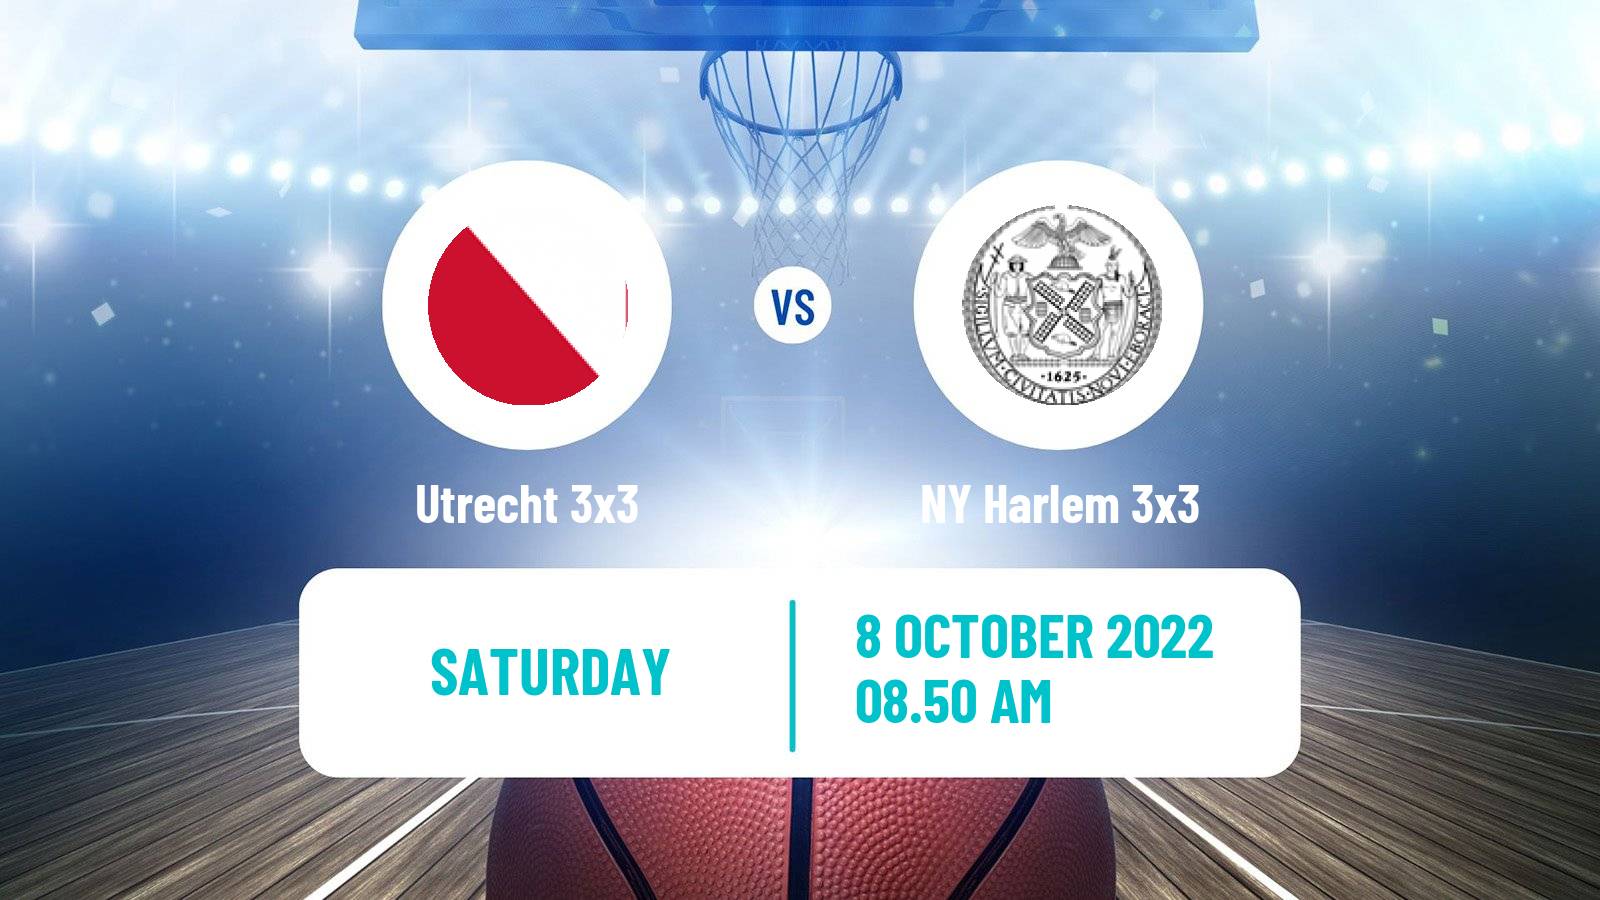 Basketball World Tour Paris 3x3 Utrecht 3x3 - NY Harlem 3x3